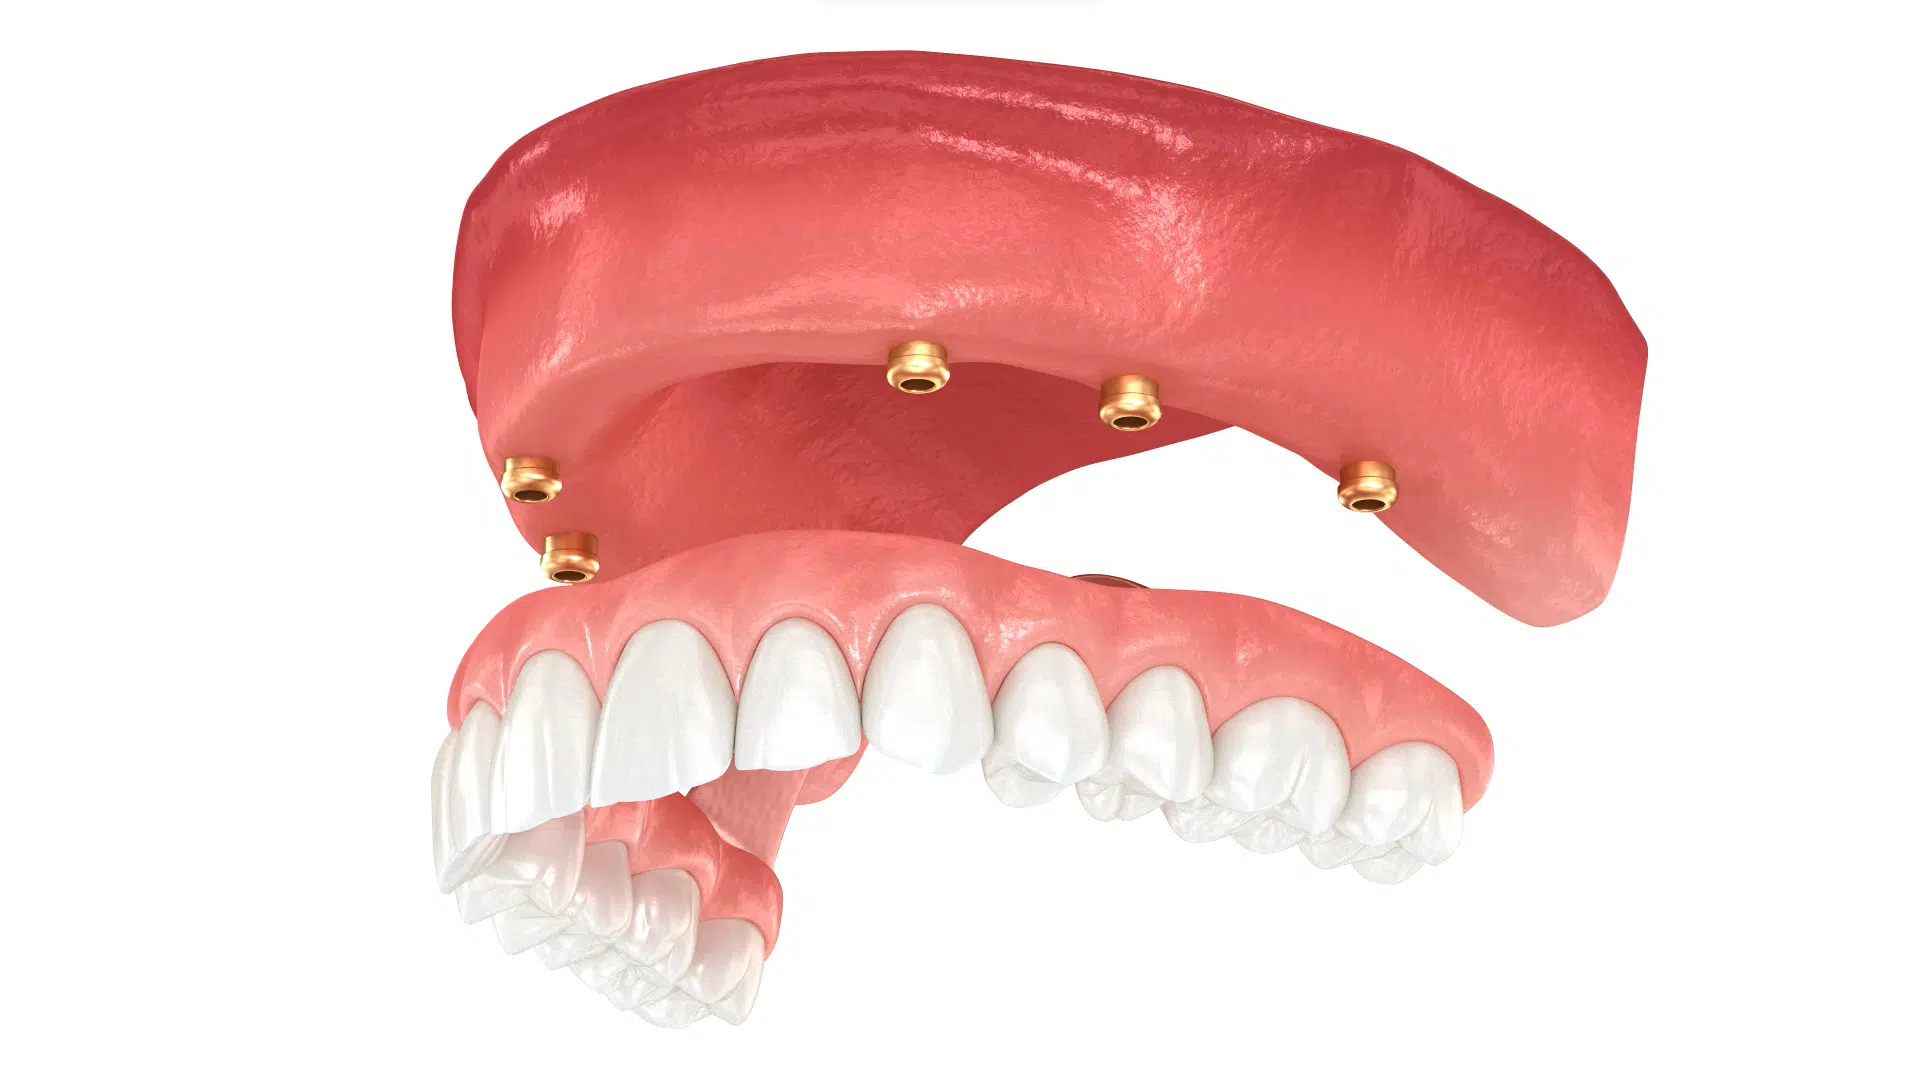 Implantología, prótesis dental híbrida